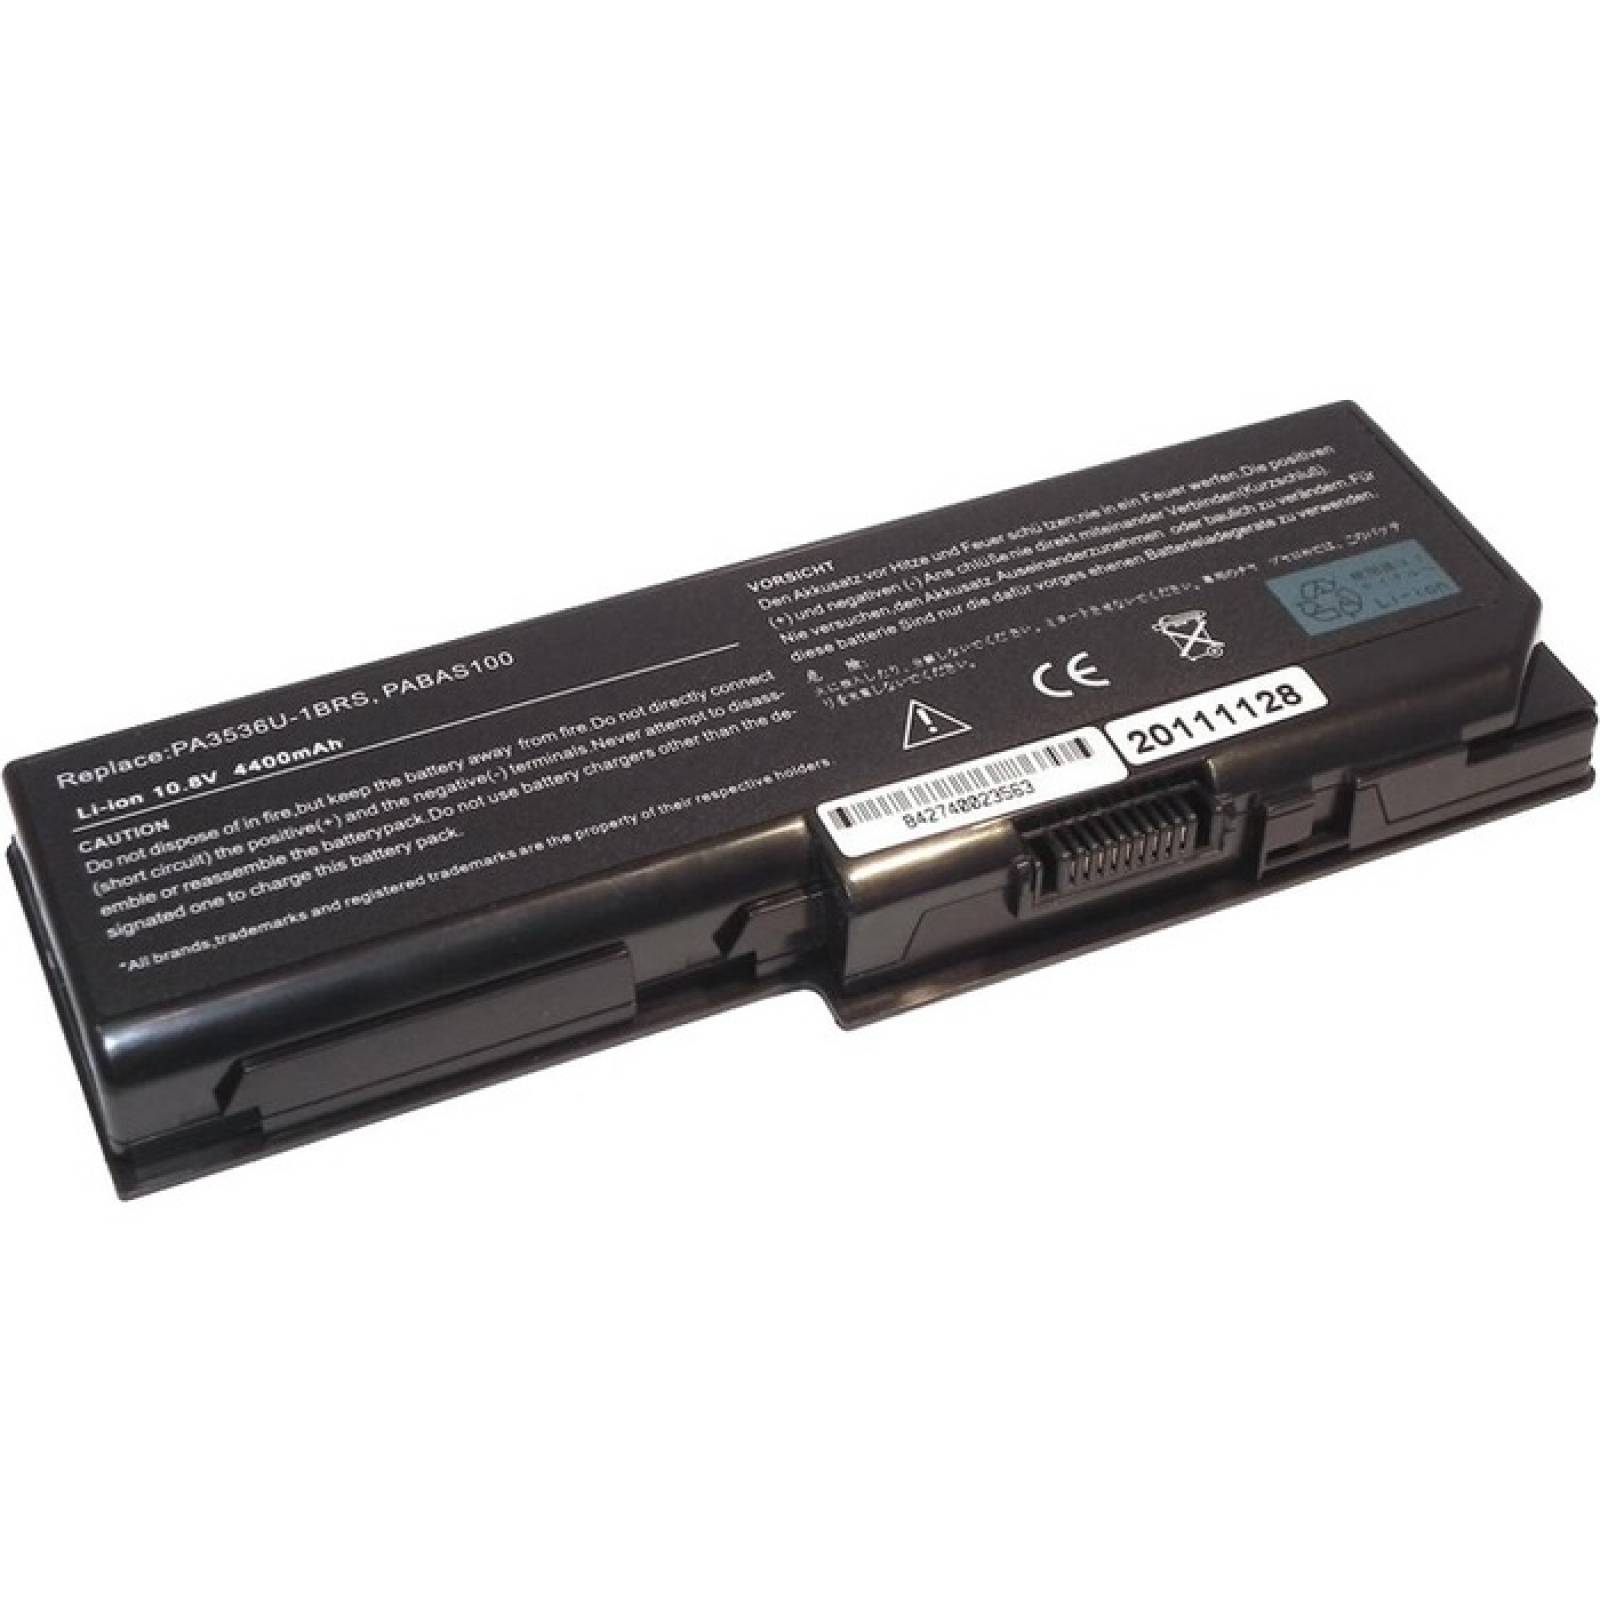 Batera compatible de 9 celdas (6600 mAh) para Toshiba Satellite A200 A205 A210 A215 A300 A305 L300 L305 M200 M